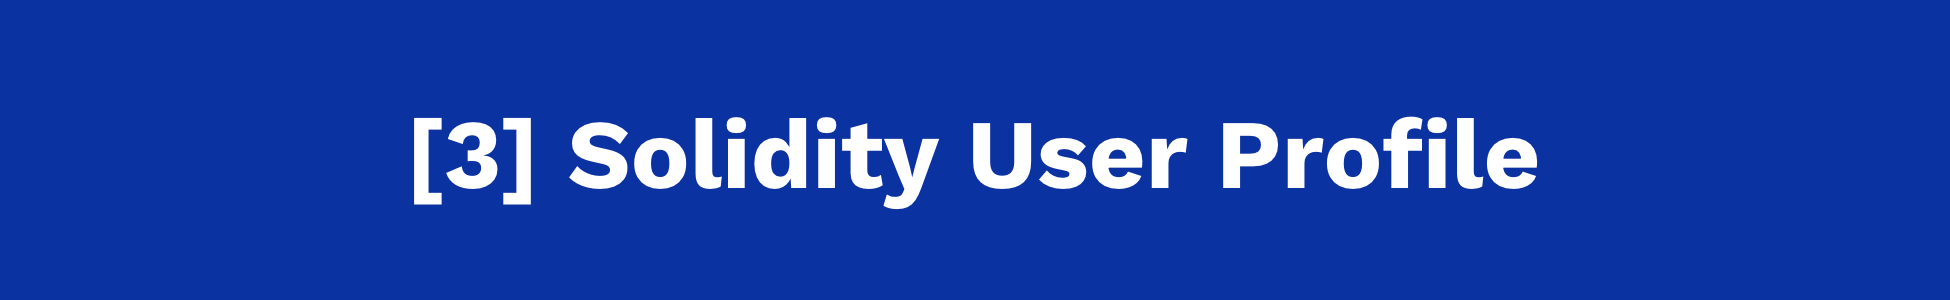 Solidity User Profile Header